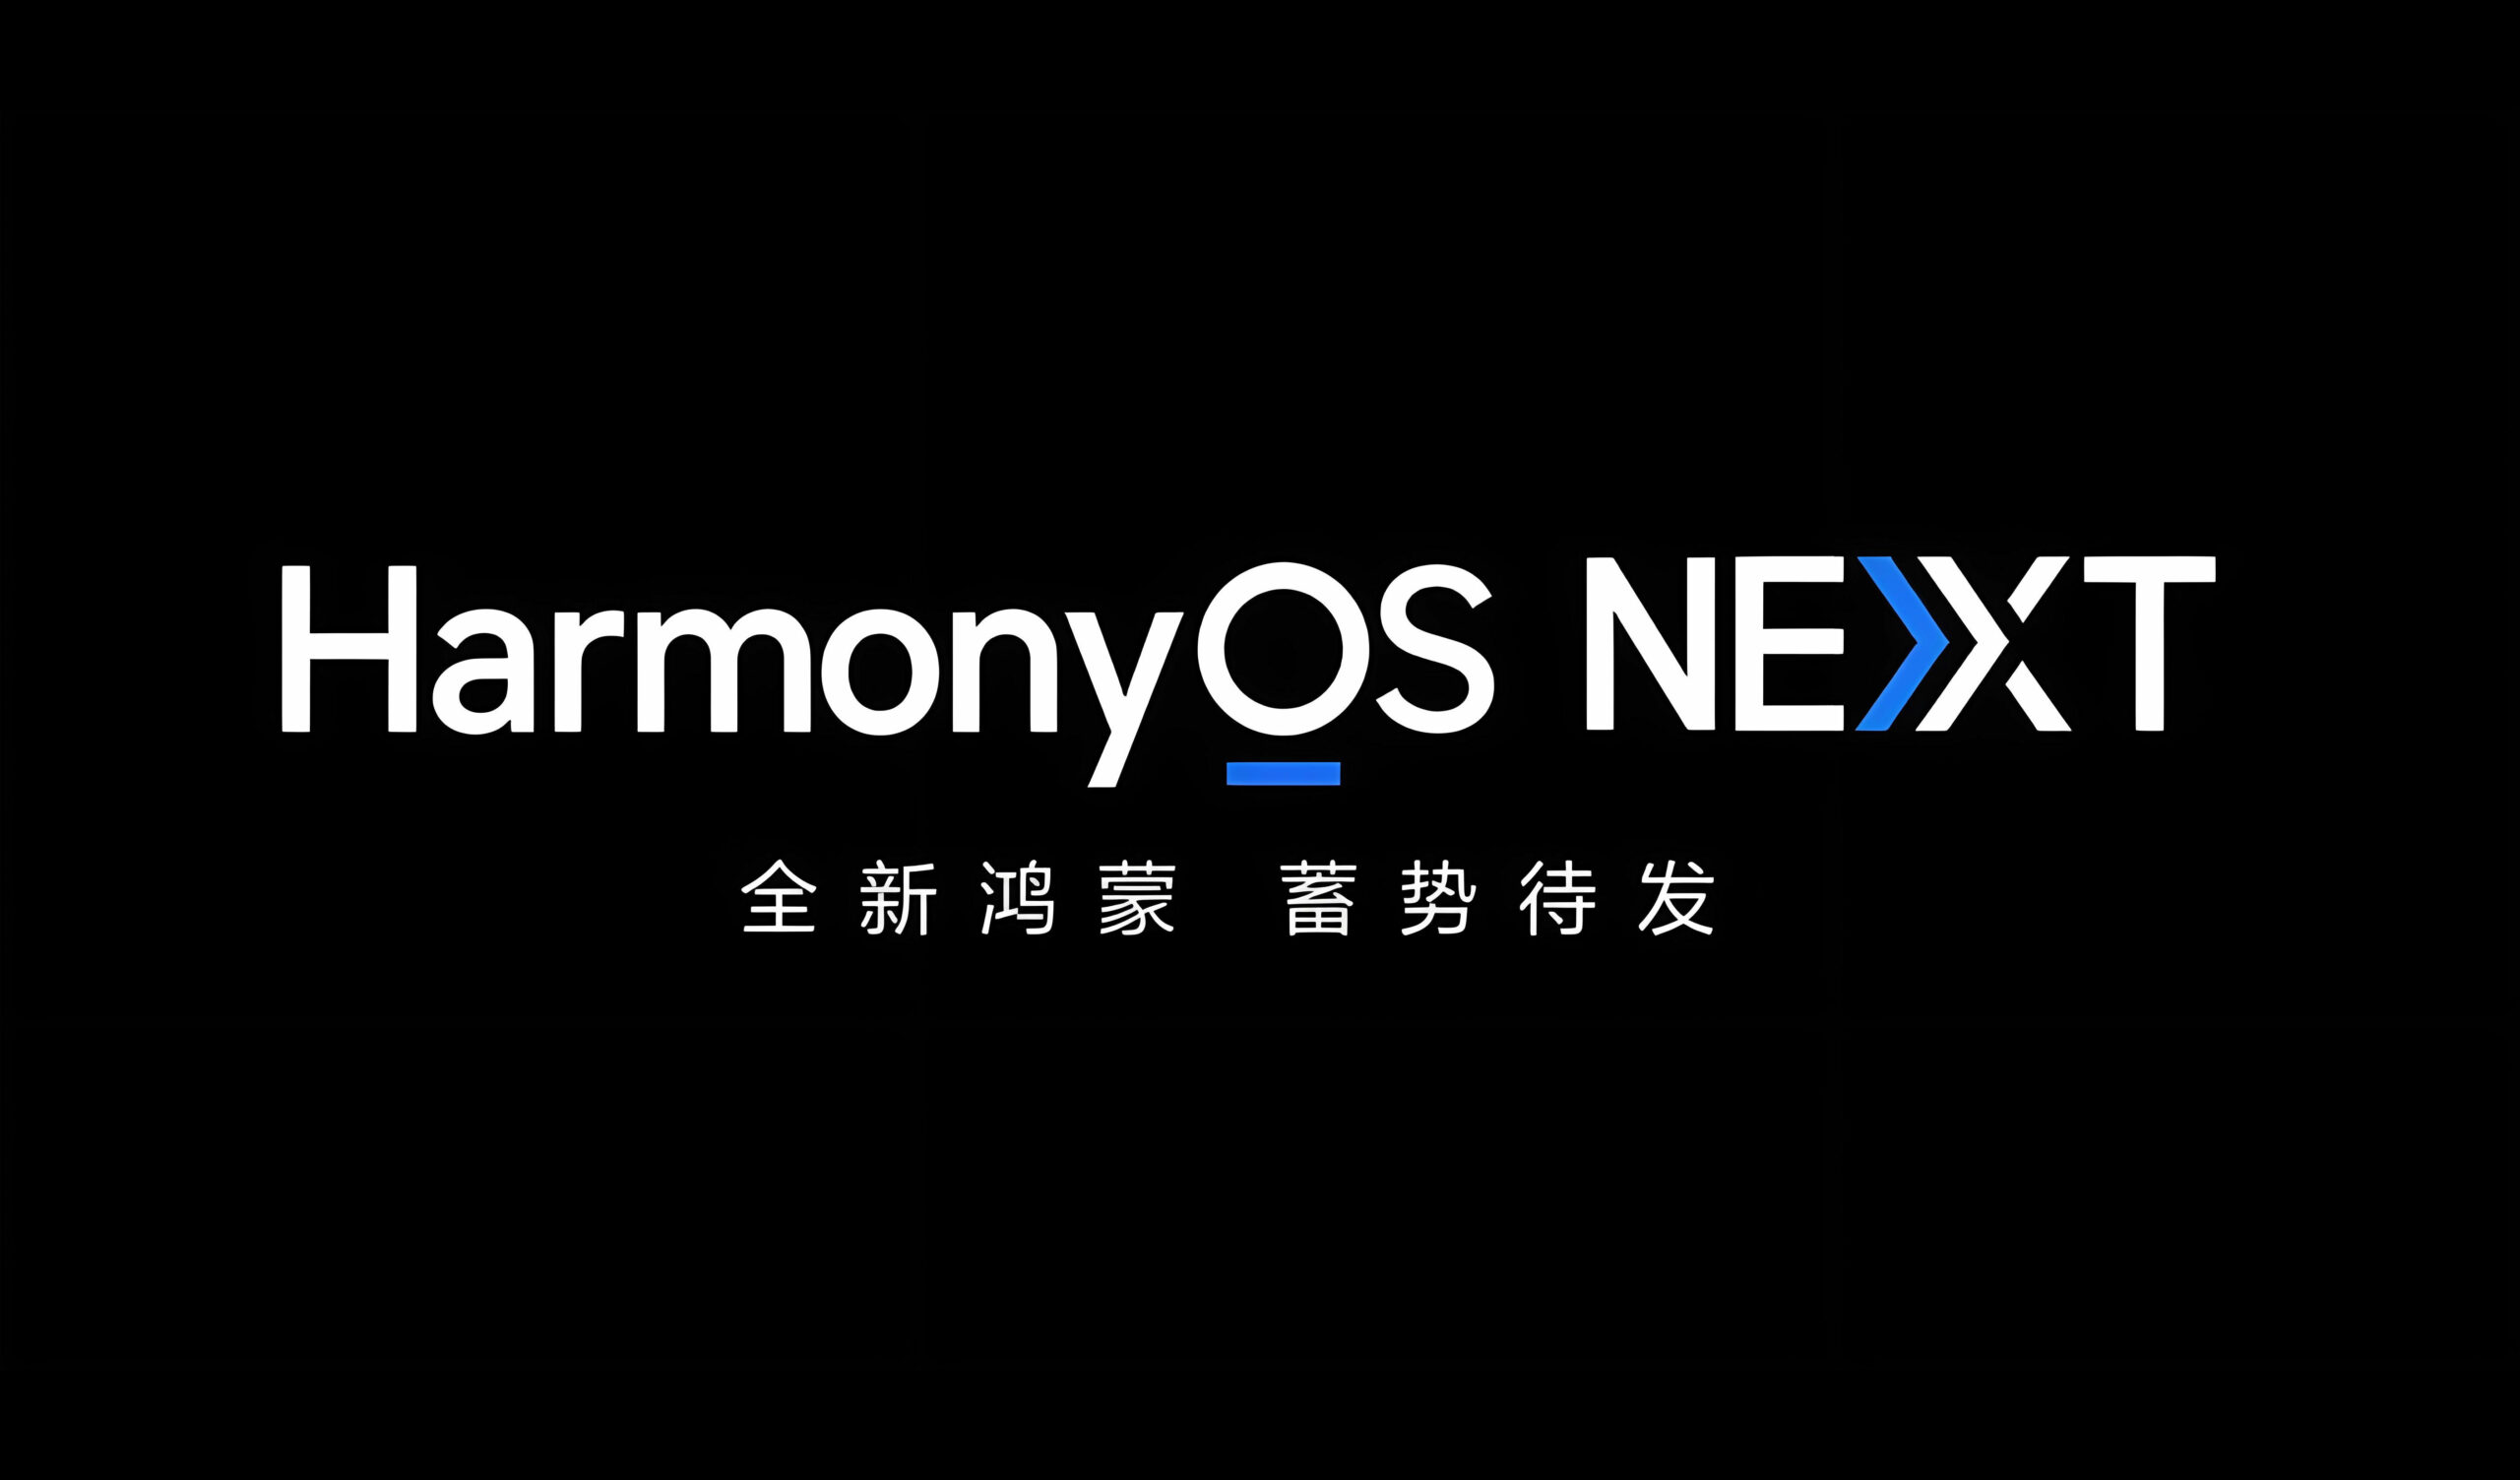 华为HUAWEI拓展HarmonyOS生态系统，发布HarmonyOS NEXT与Harmony Galaxy